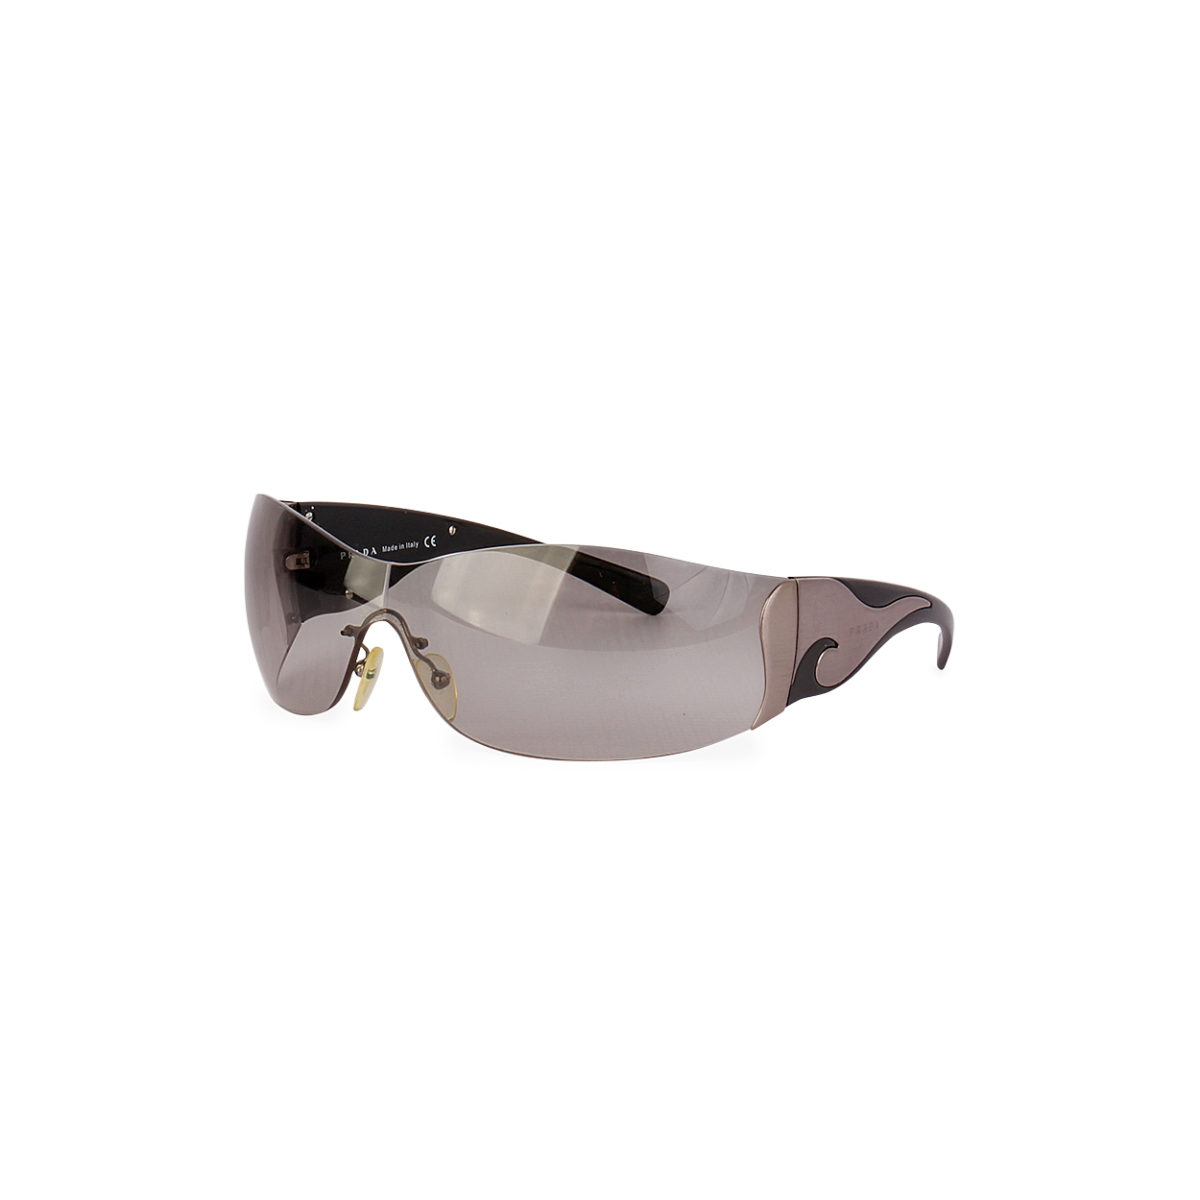 PRADA Sunglasses Silver and Black SPR 